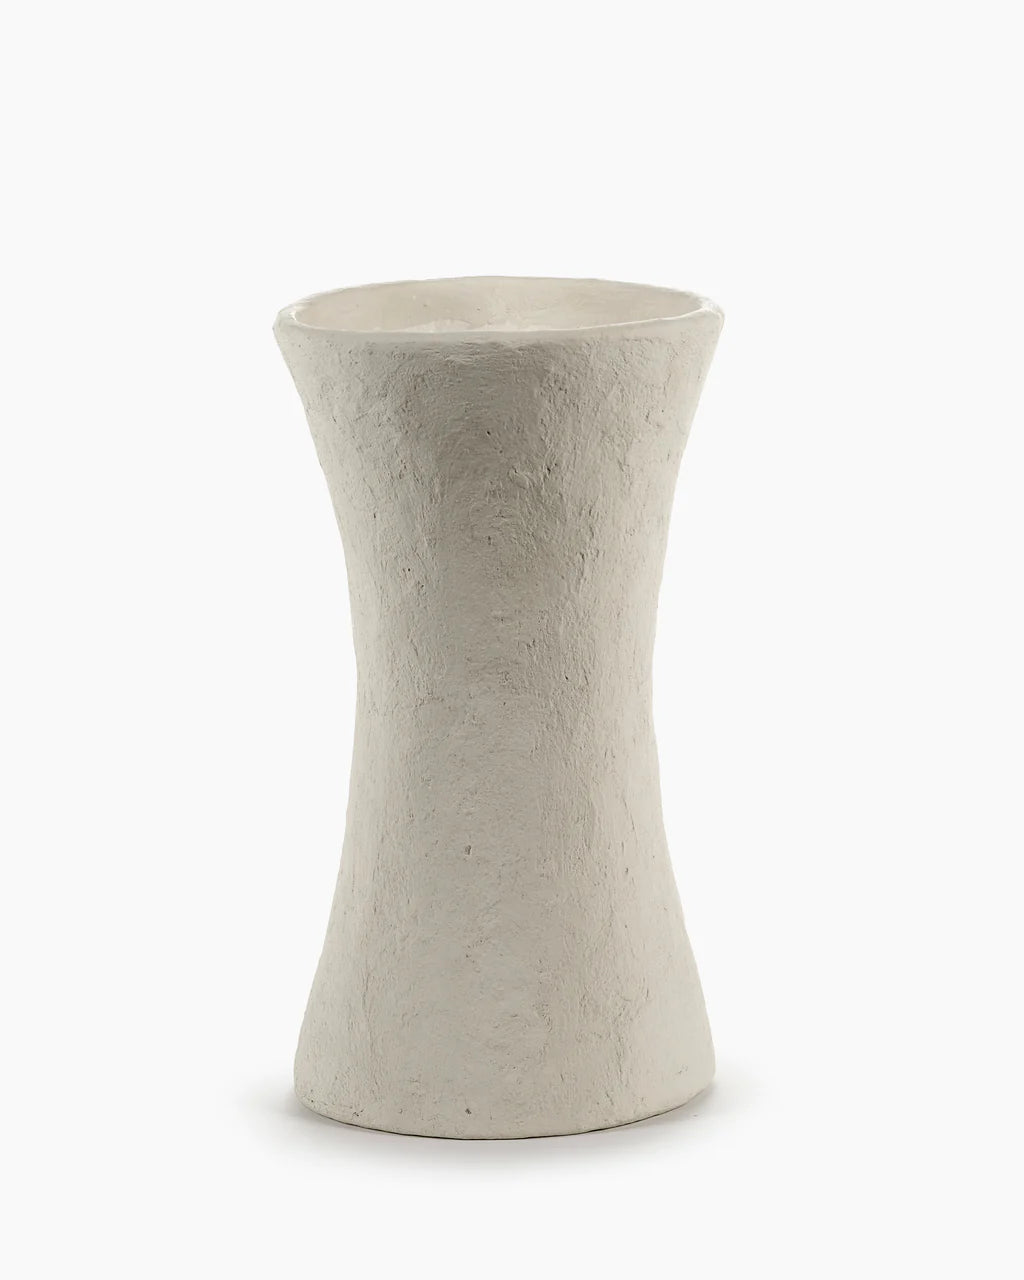 Earth paper mache vase by Marie Michielssen small